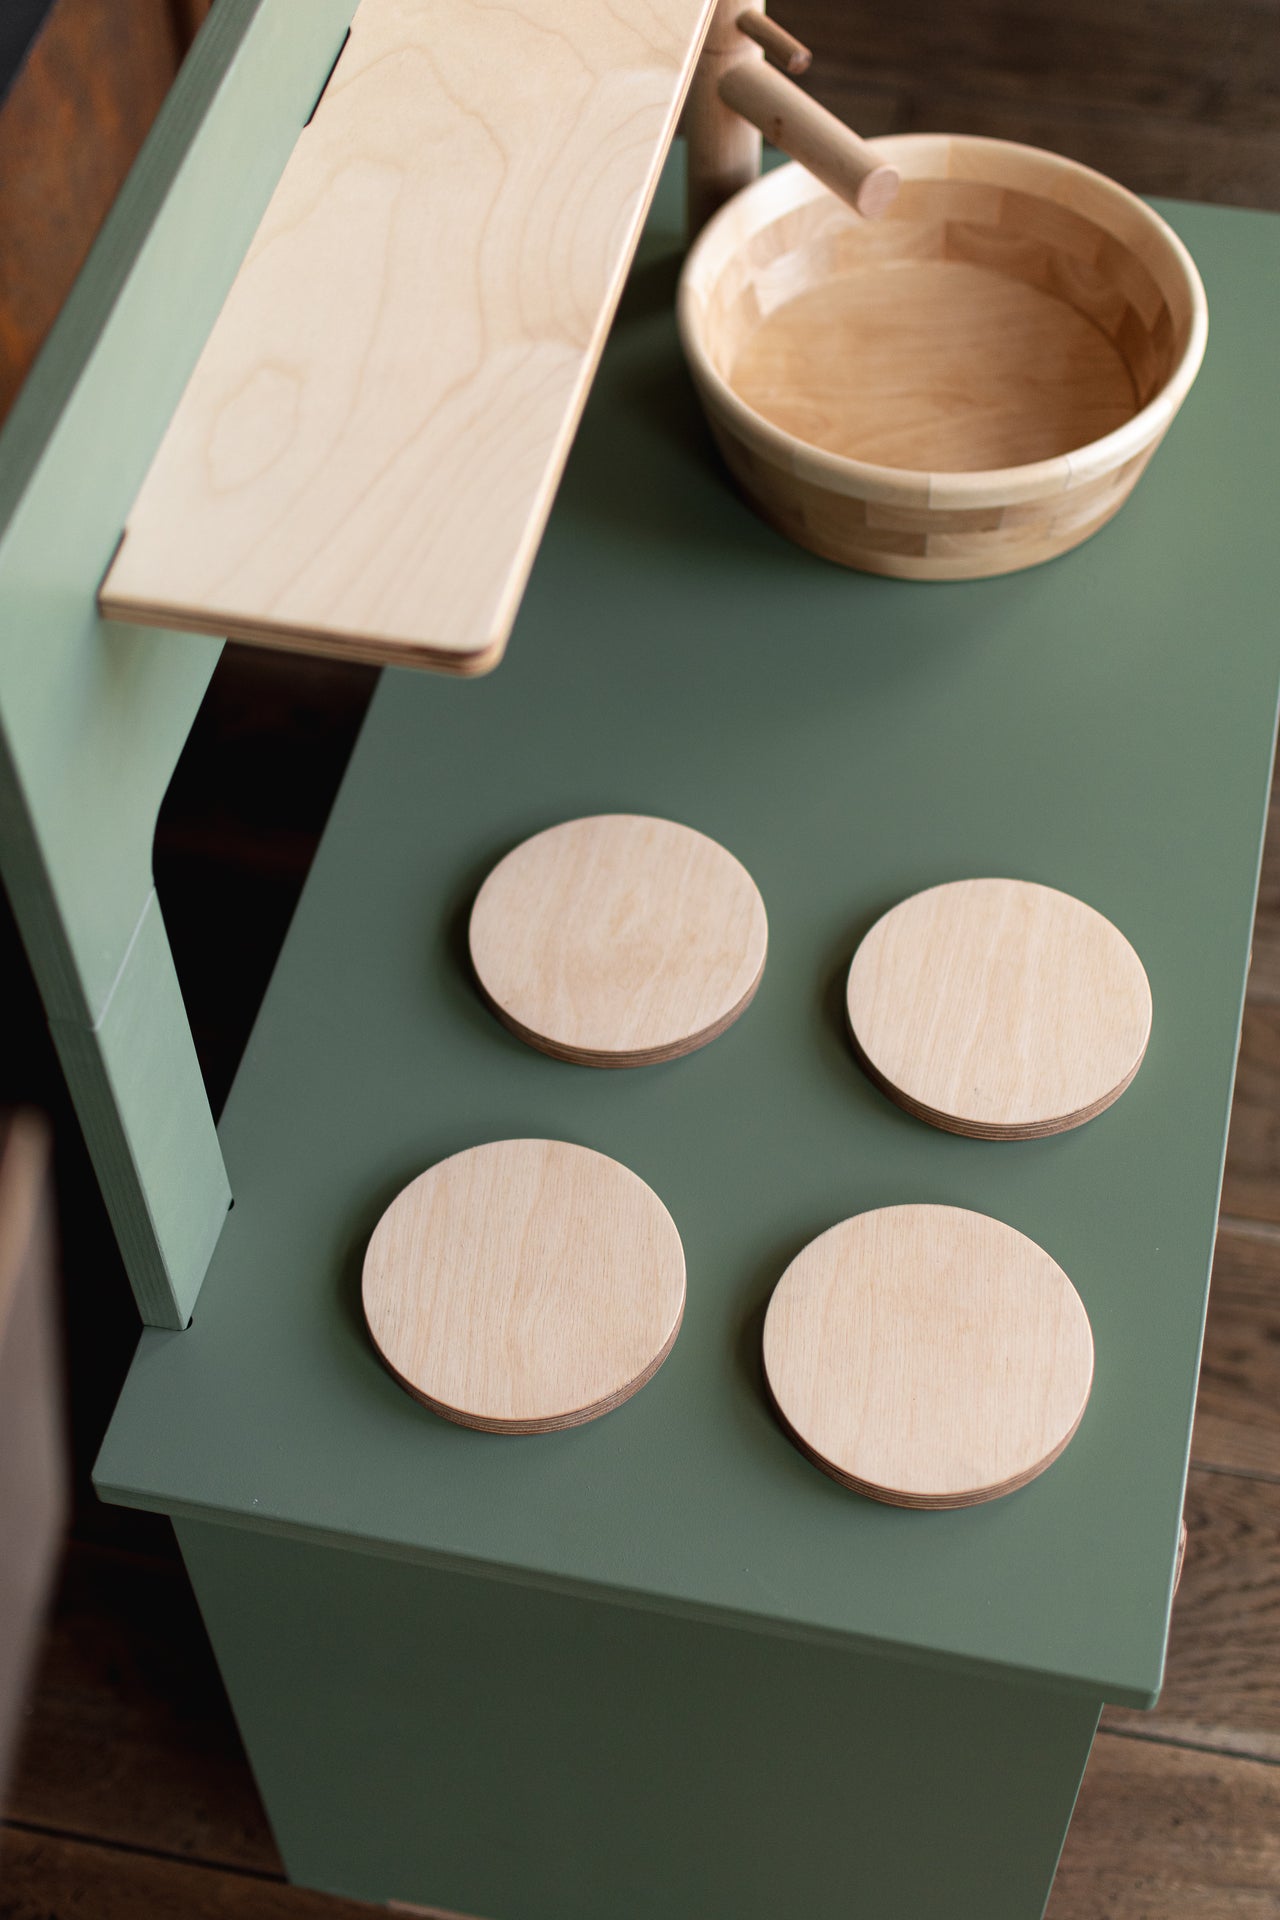 Milk Wooden Play Kitchen - MIDMINI - Plywood Furniture